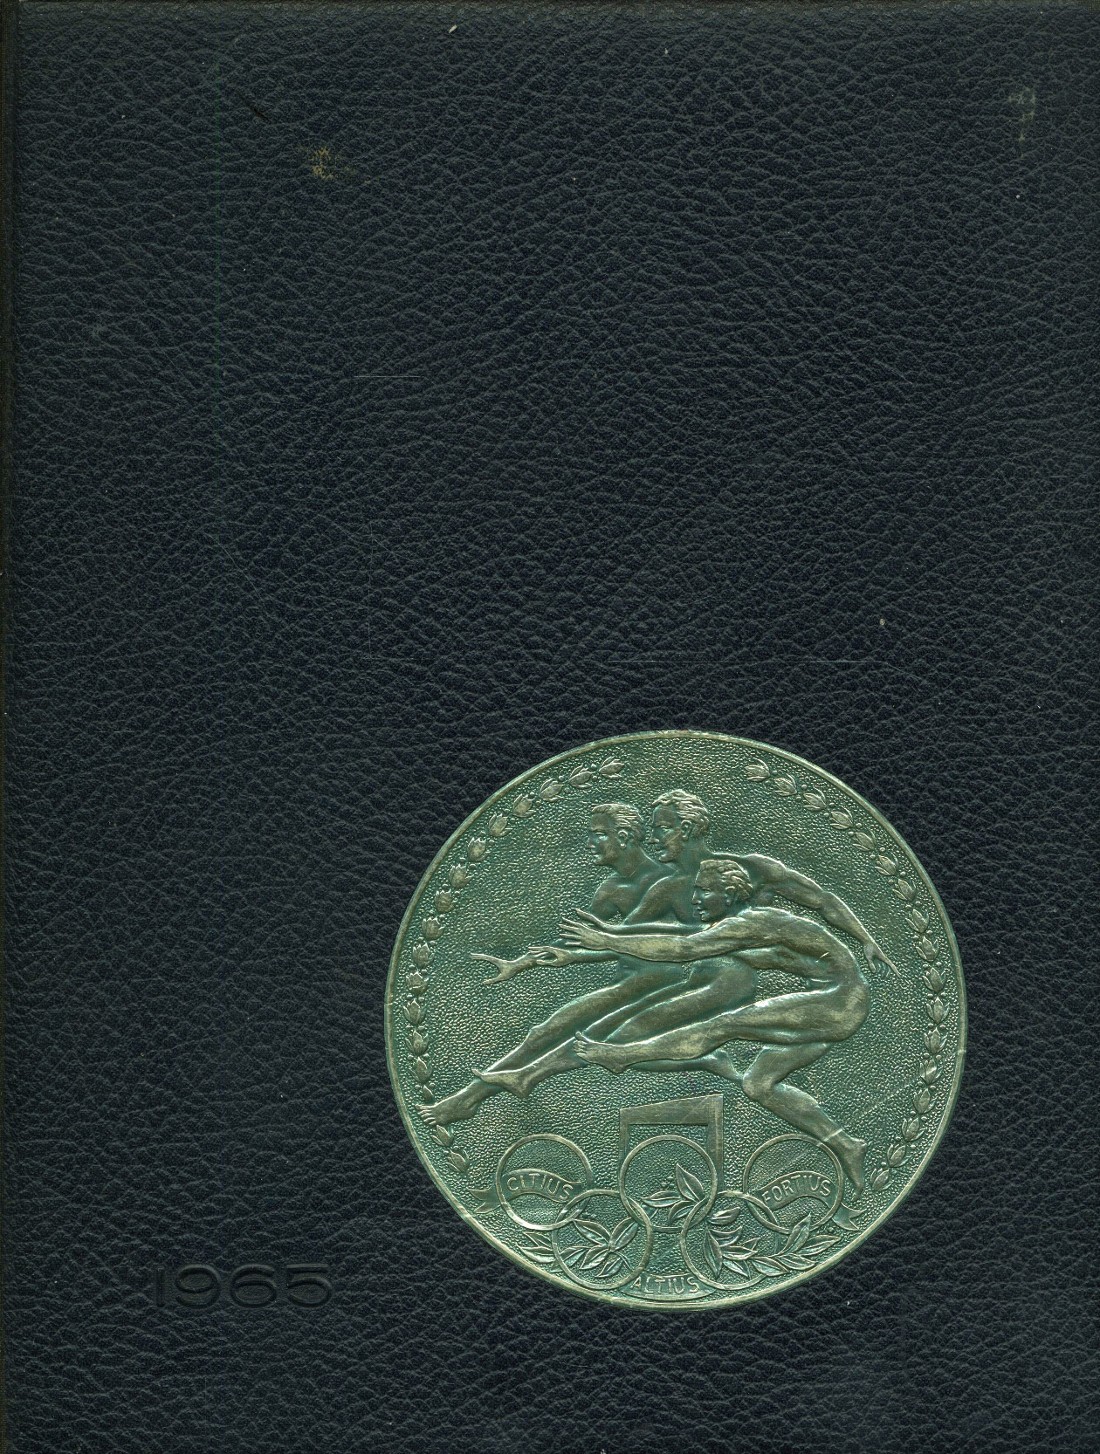 1965-yearbook-from-gardena-high-school-from-gardena-california-for-sale